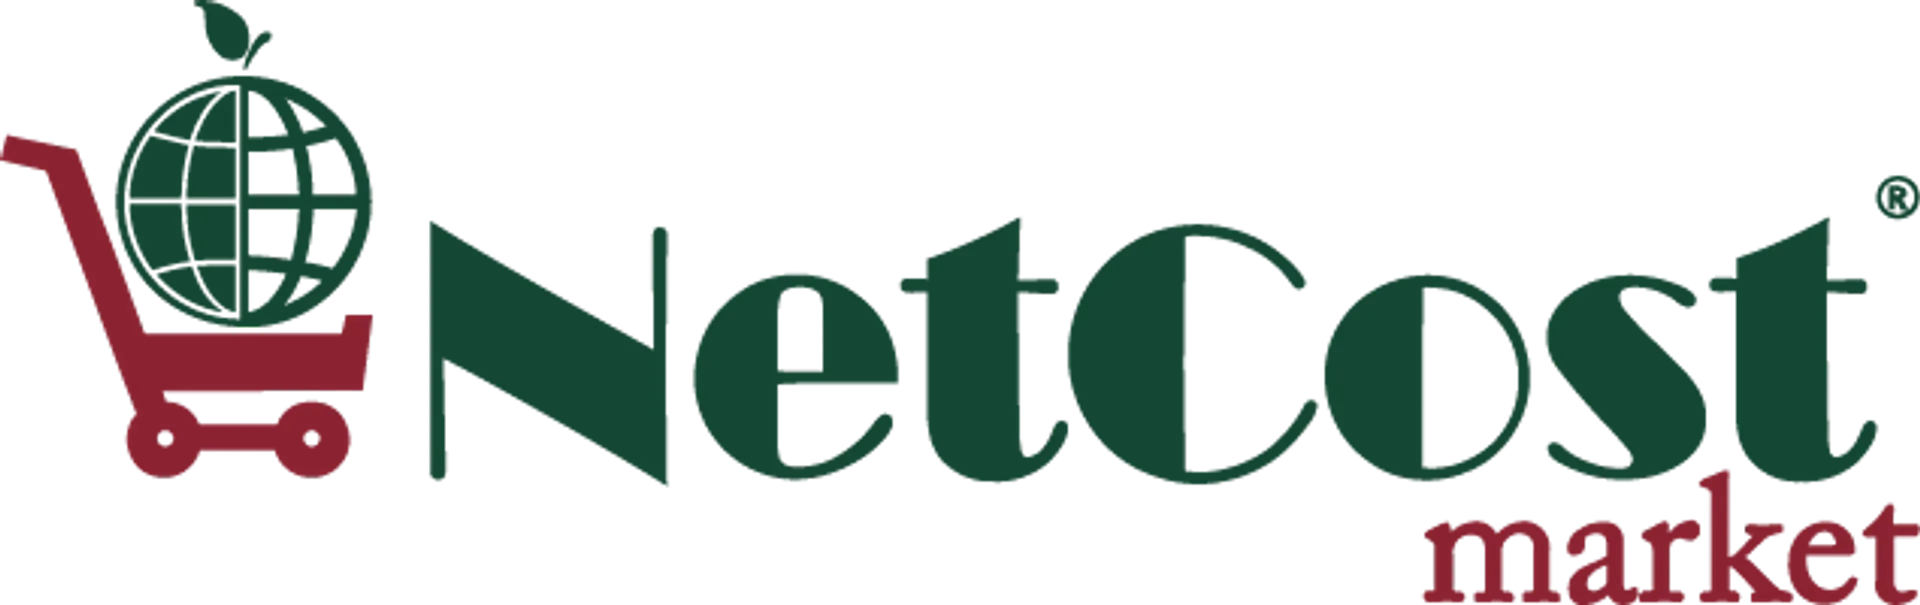 NET COST MARKET logo de catálogo